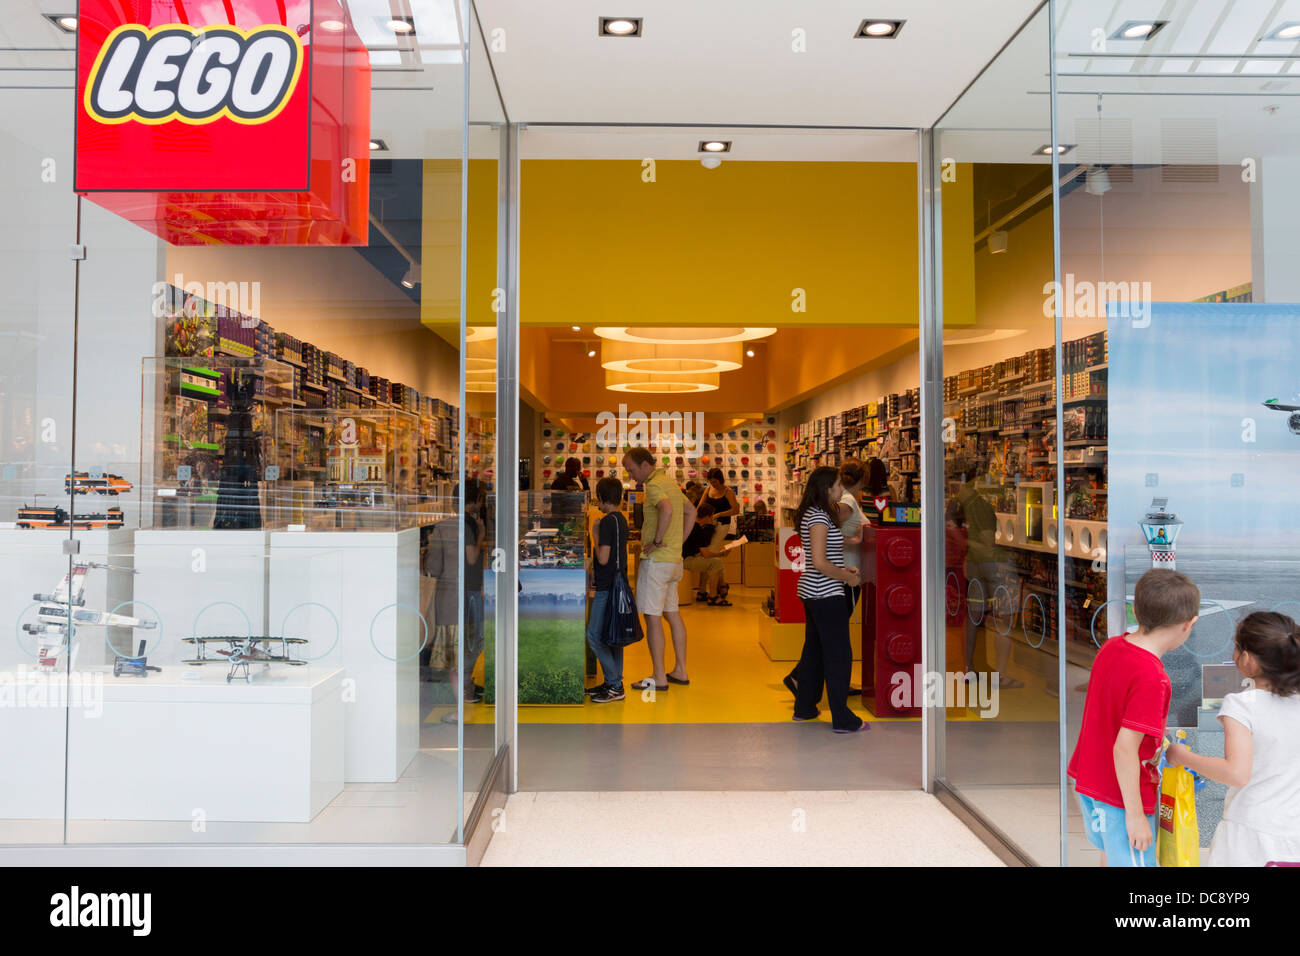 Lego Store - Intu Shopping Centre - Watford Stock Photo